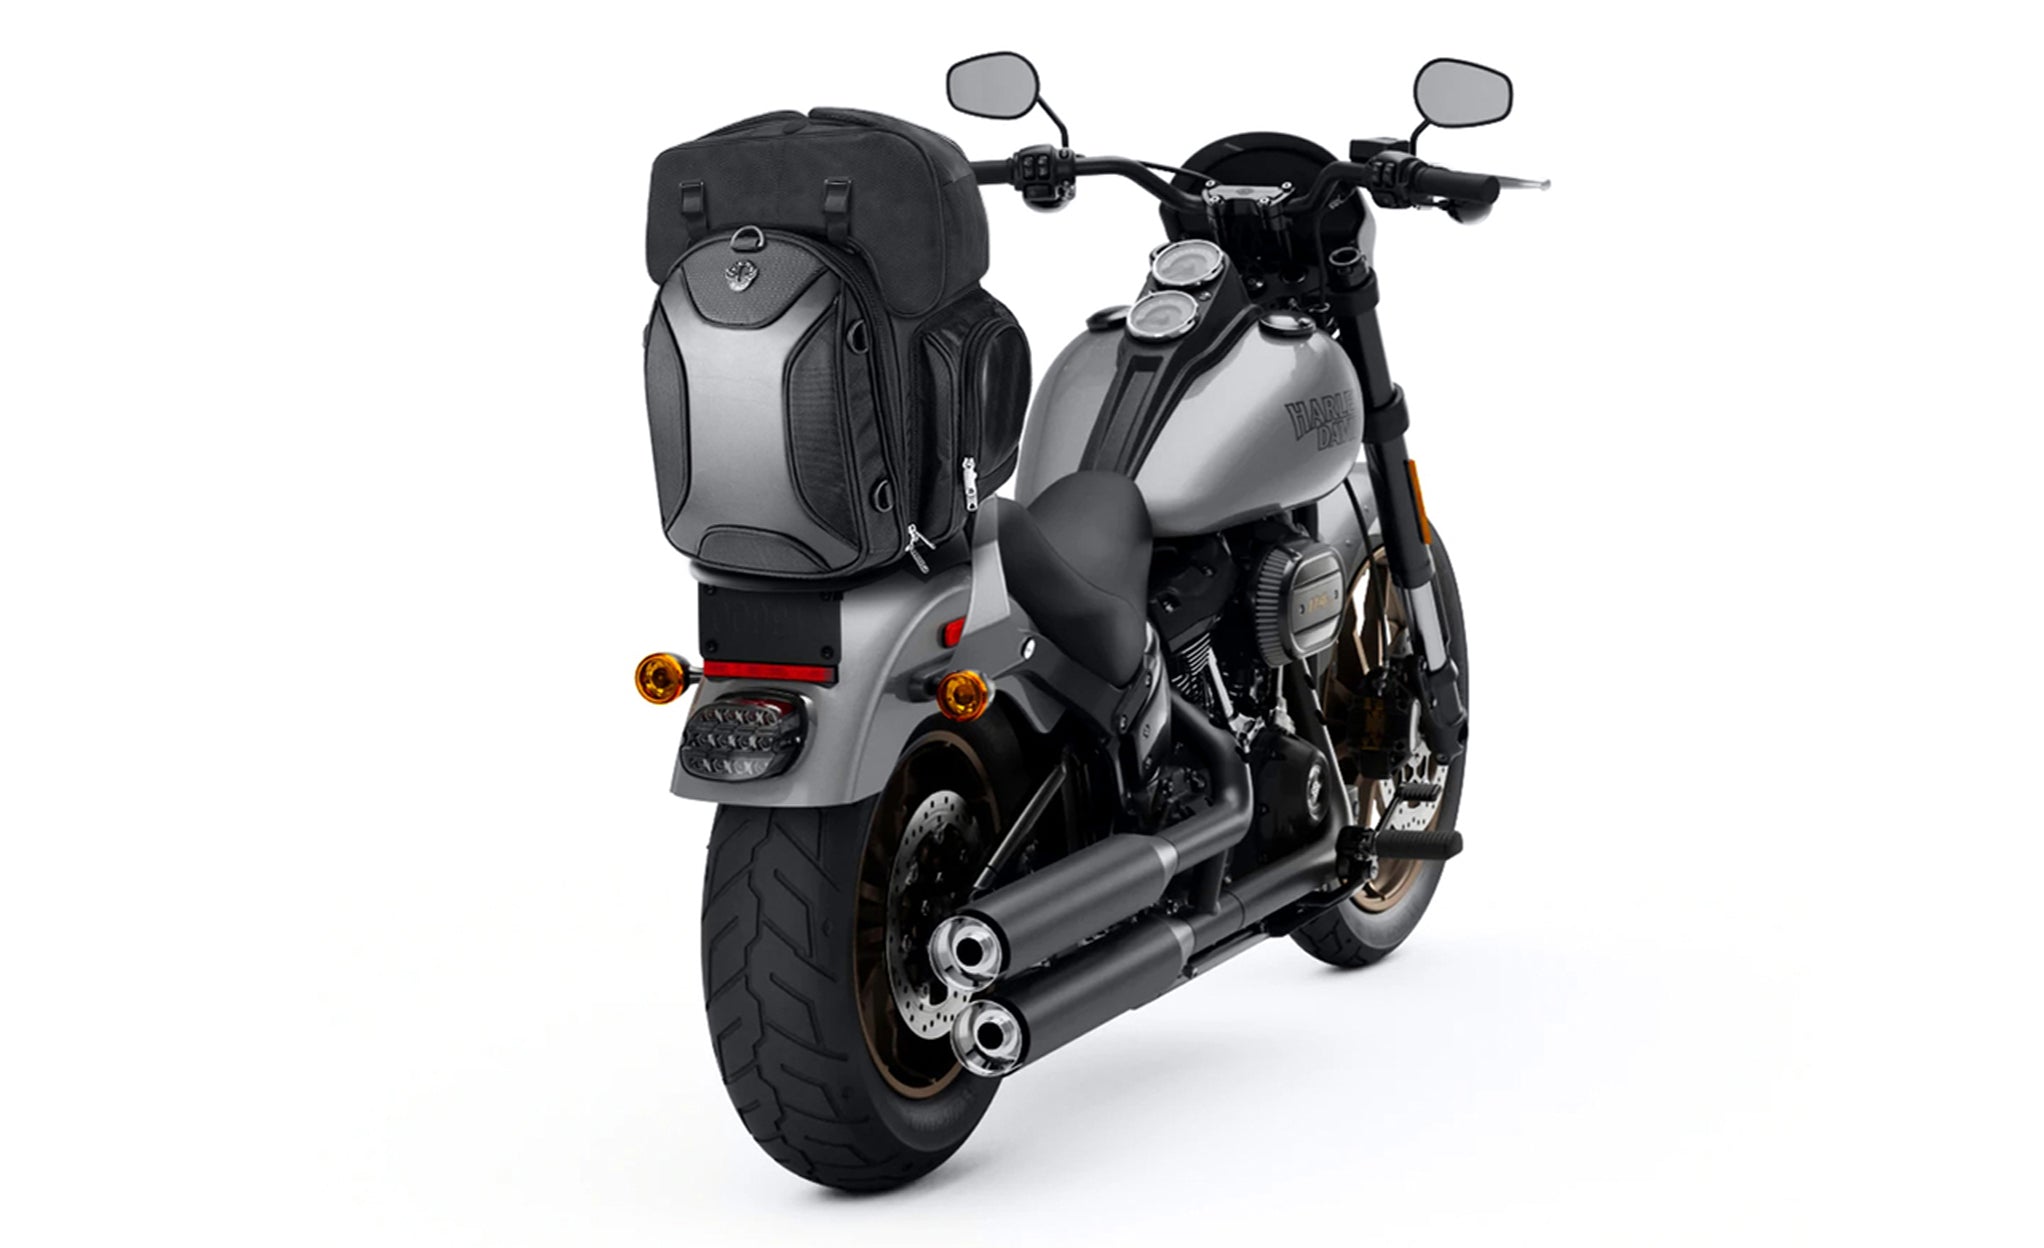 Viking Dagr Extra Large Honda Motorcycle Sissy Bar Bag Bag on Bike View @expand